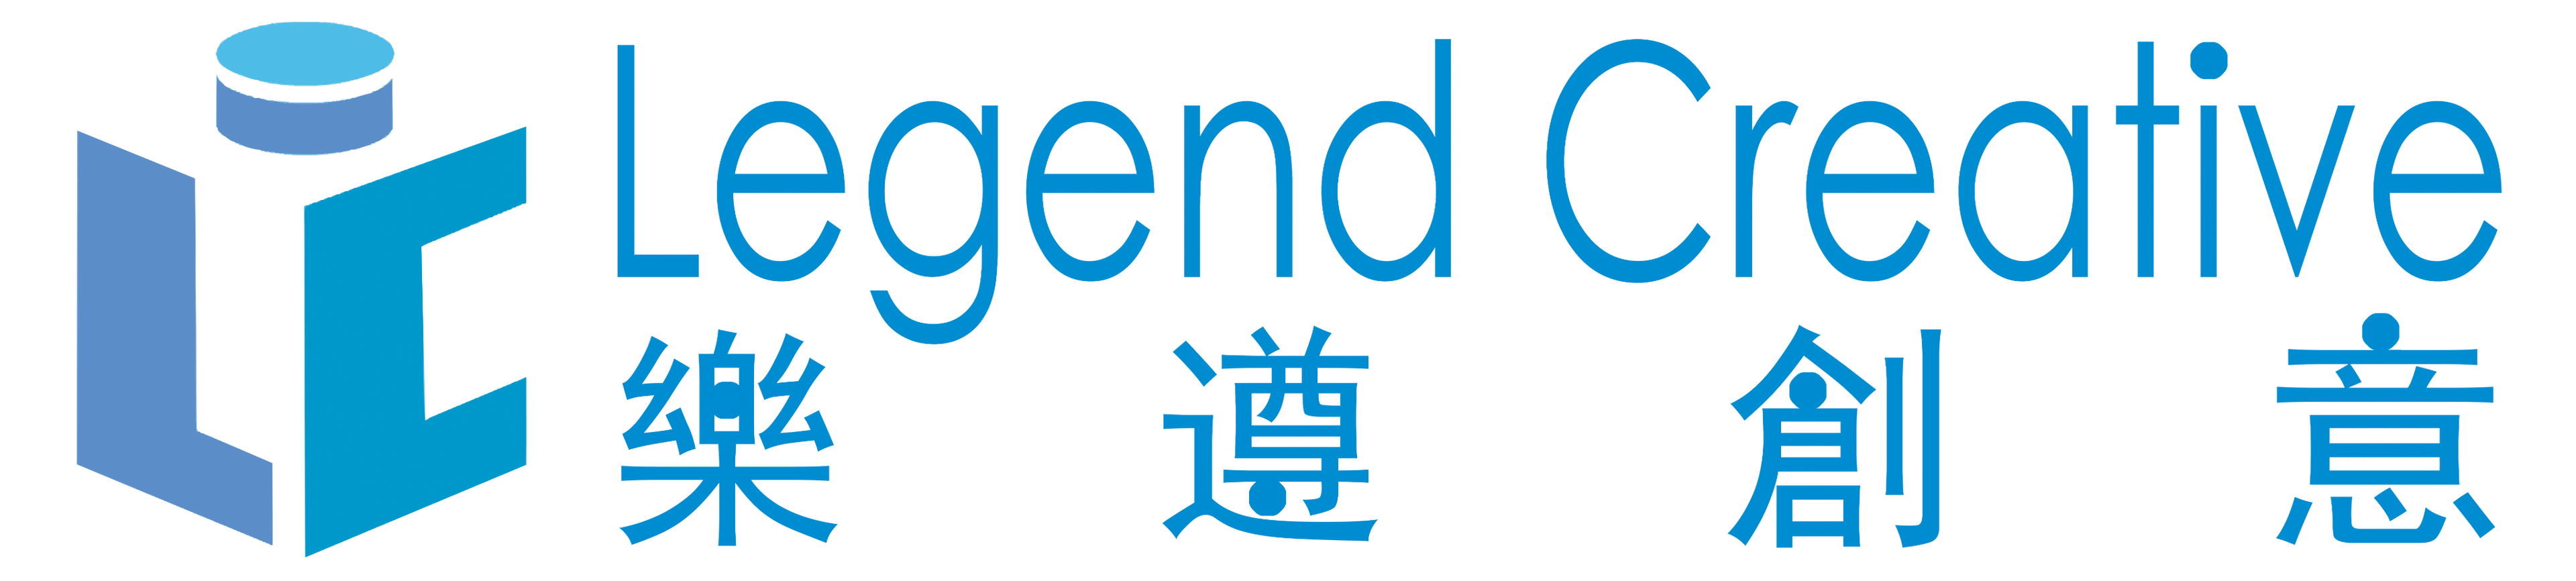 Legend creative logo